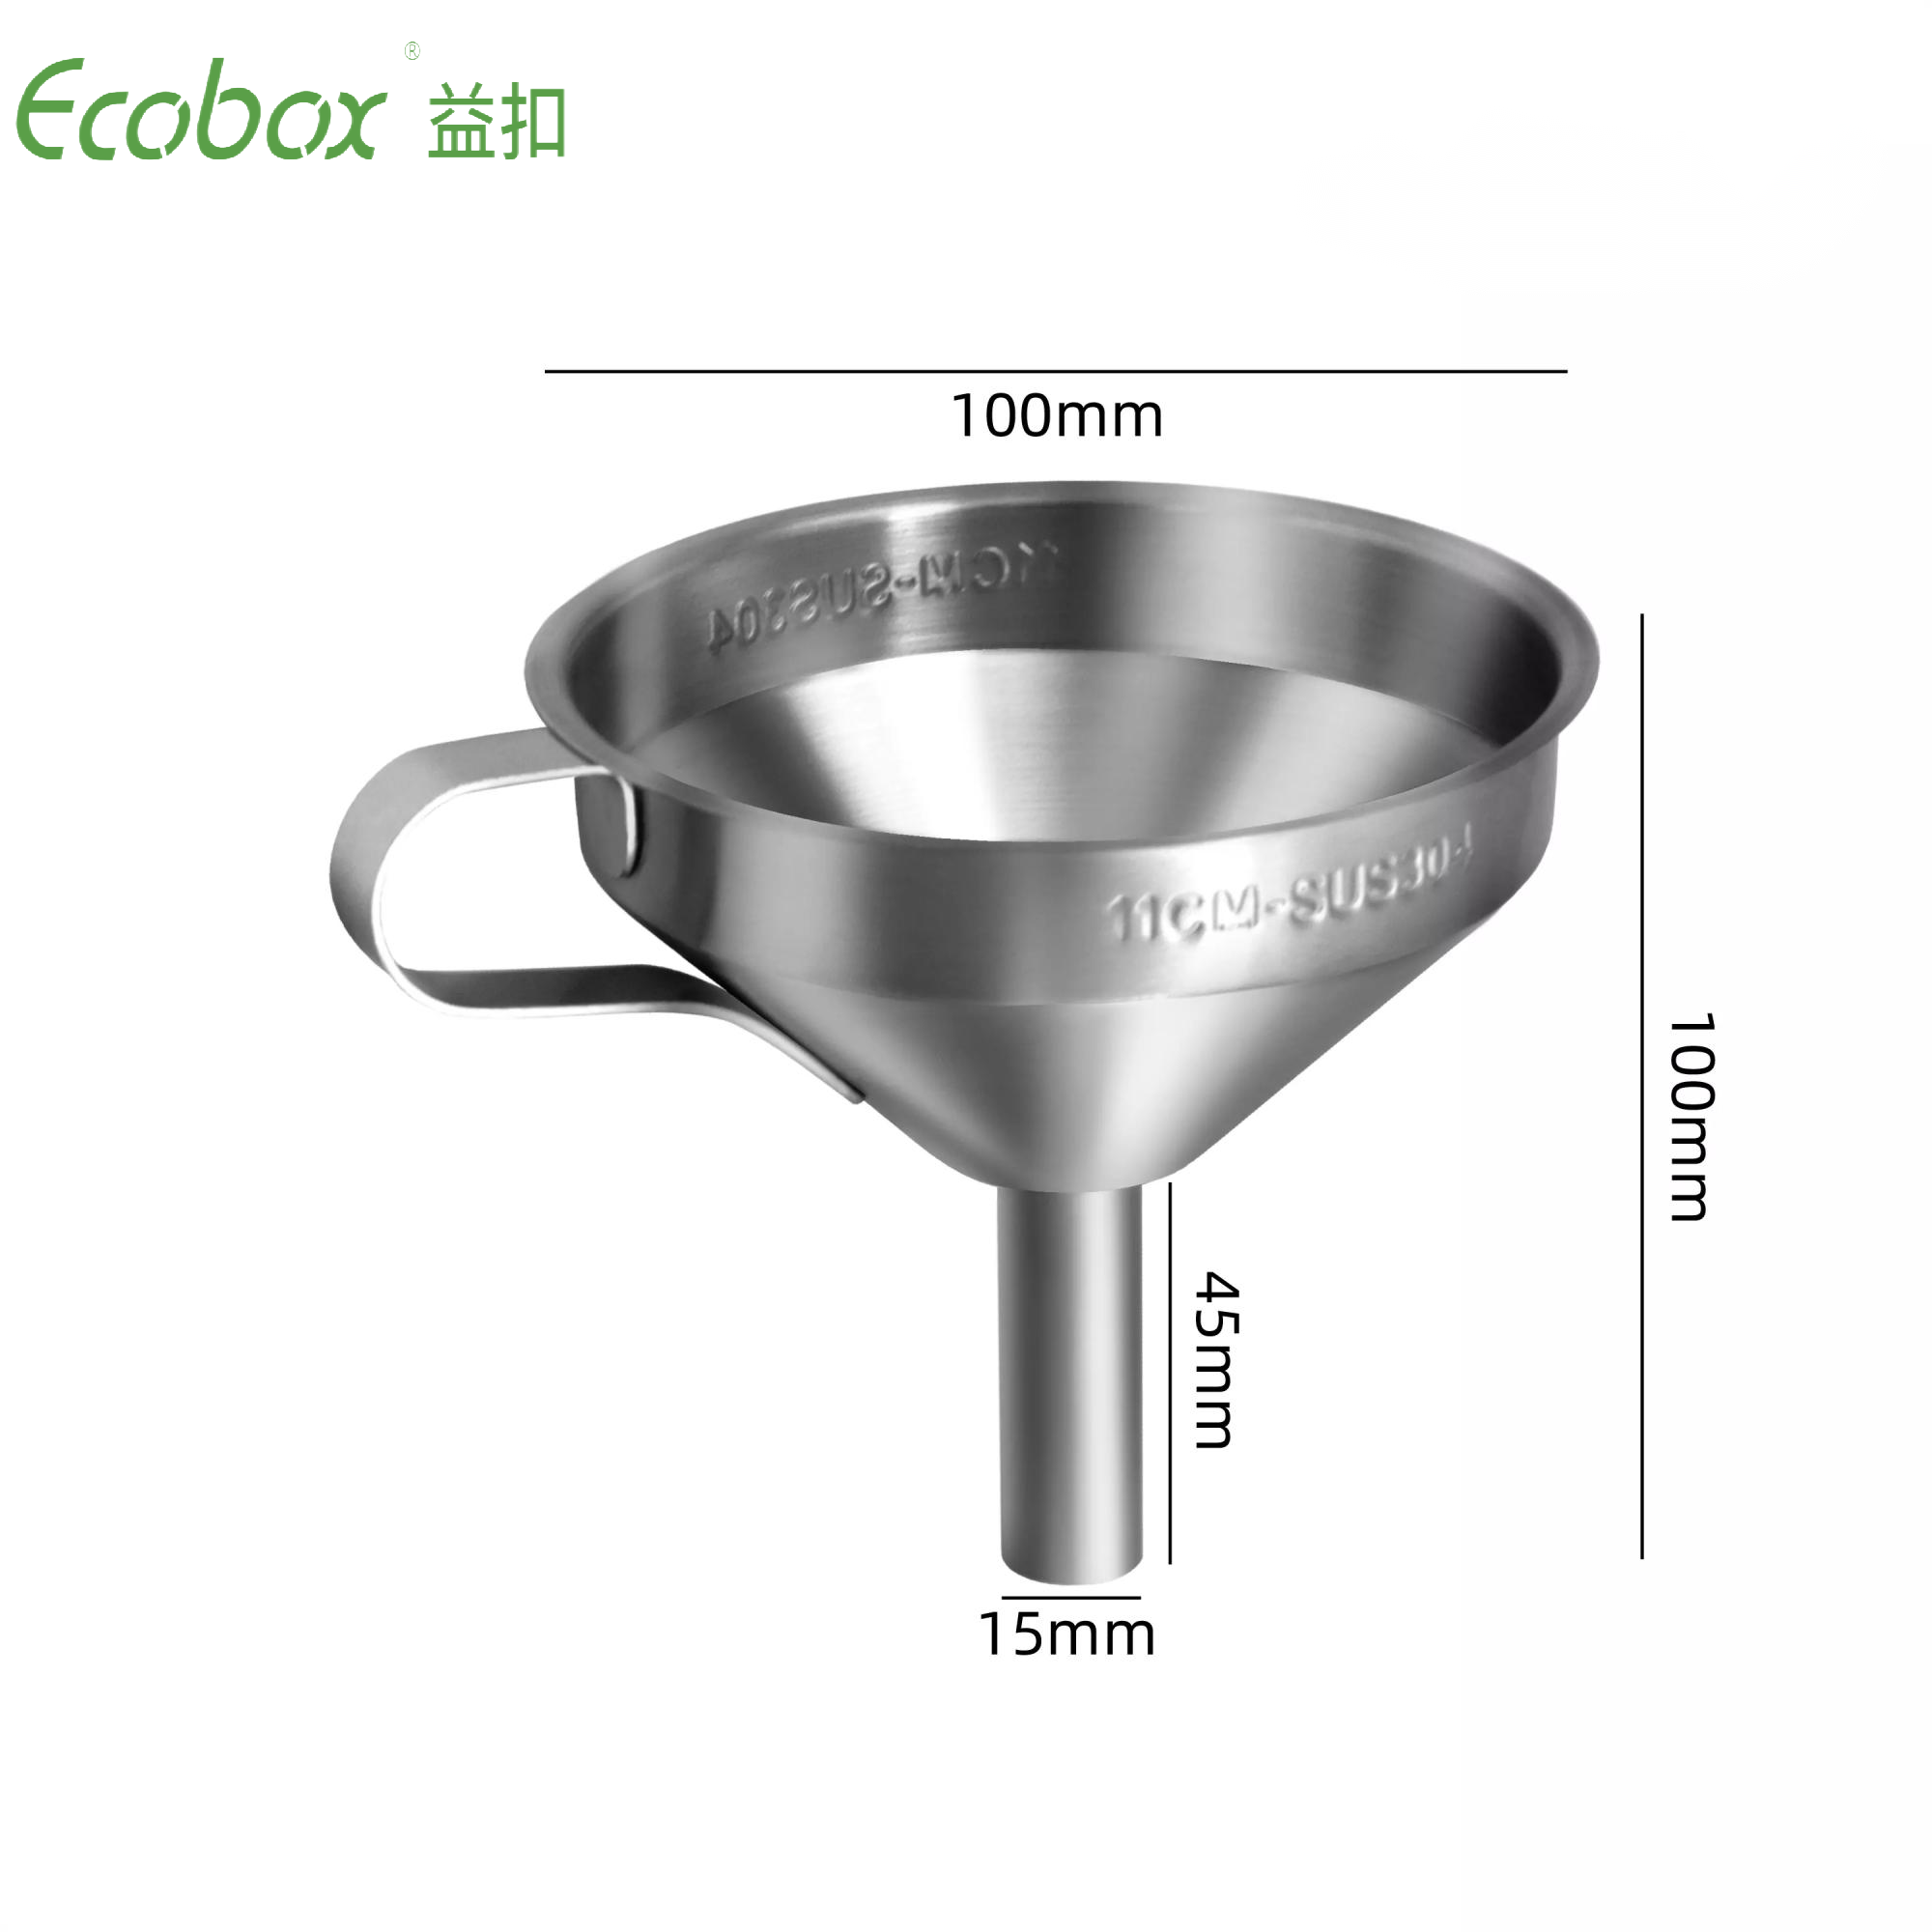 Ecobox stainless food grade oil liquid drum dispenser container for zerowaste shops